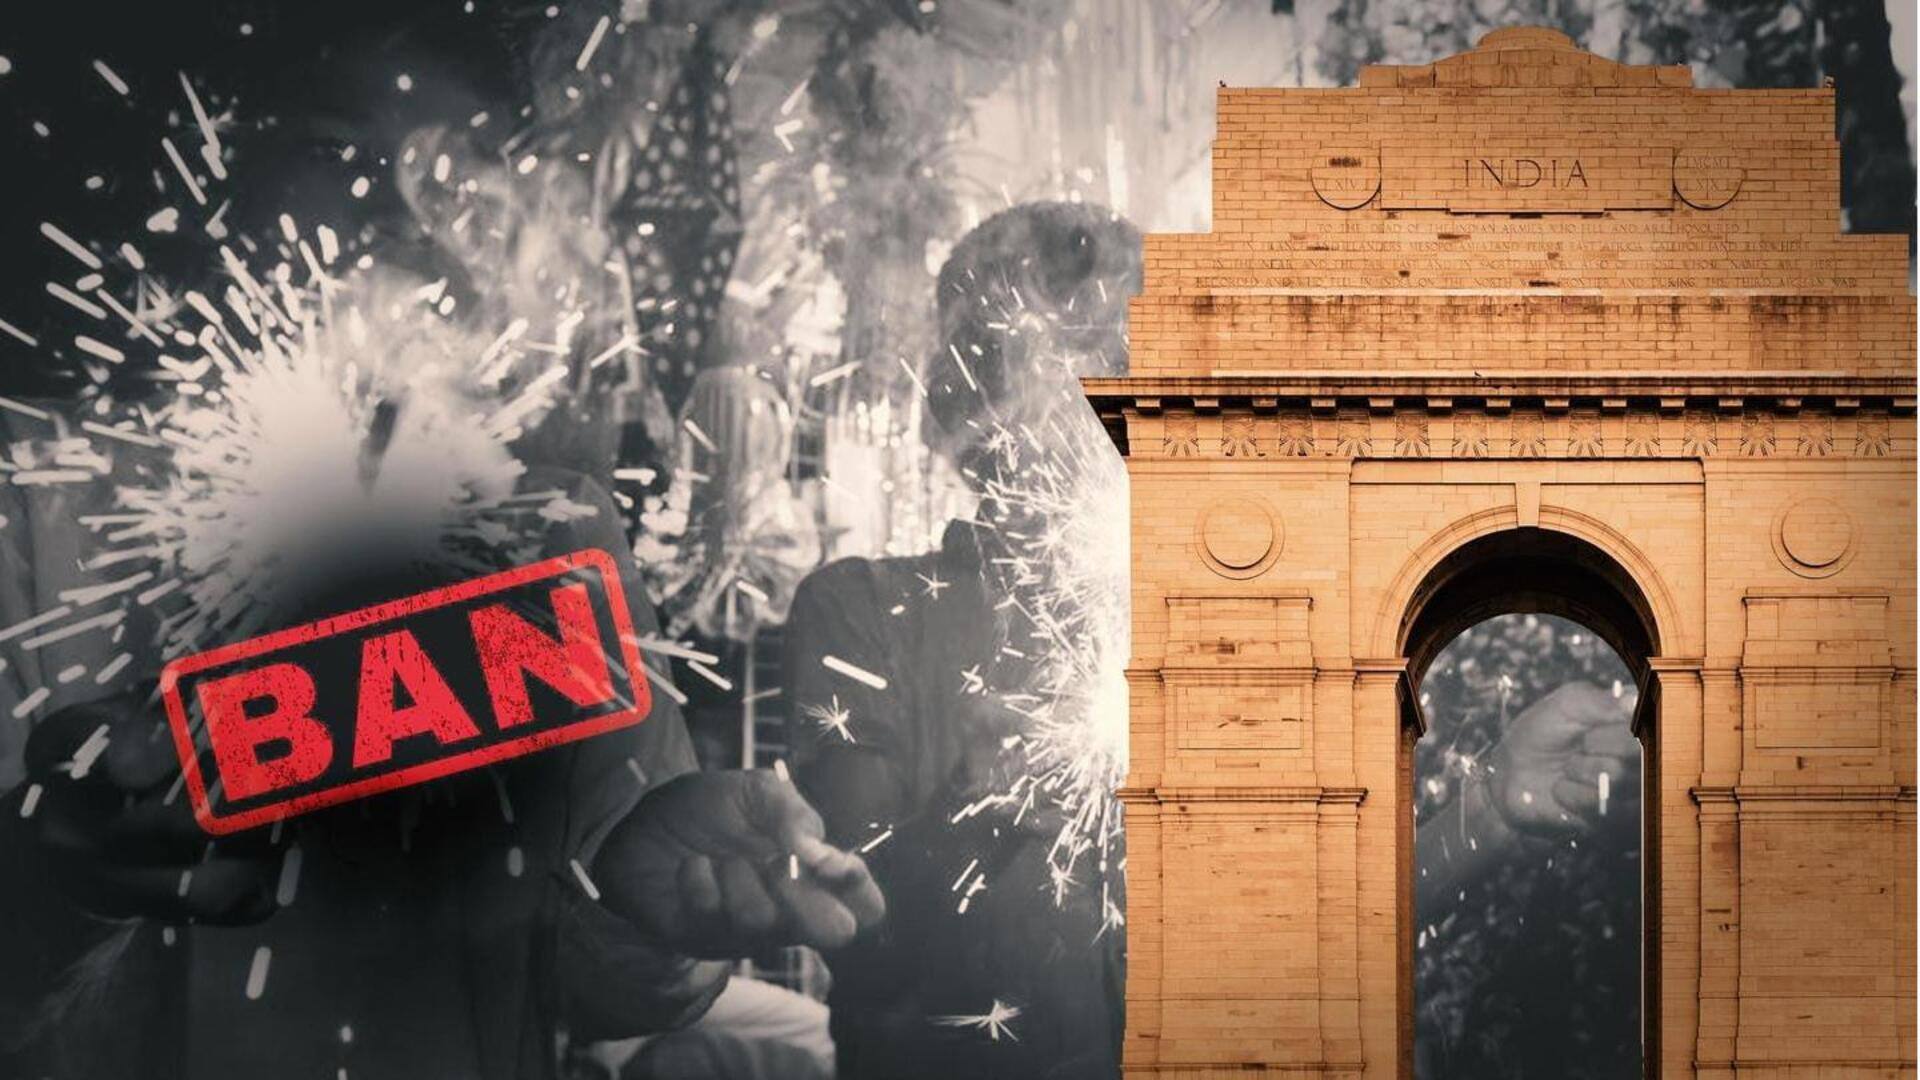 No production, sale of firecrackers: SC backs Delhi government's ban